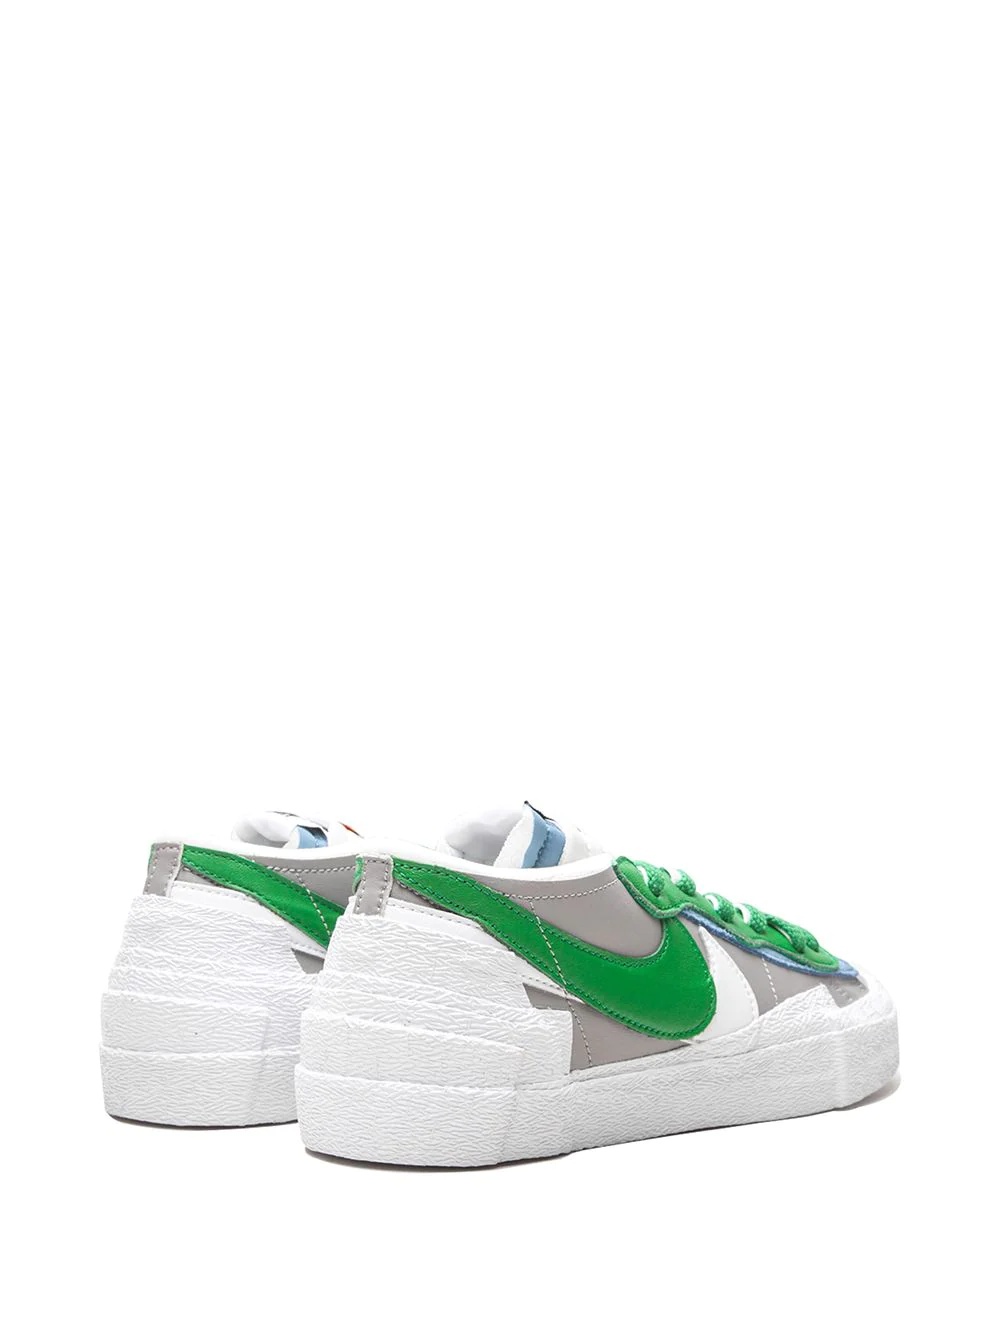 x sacai Blazer Low "Classic Green" sneakers - 3